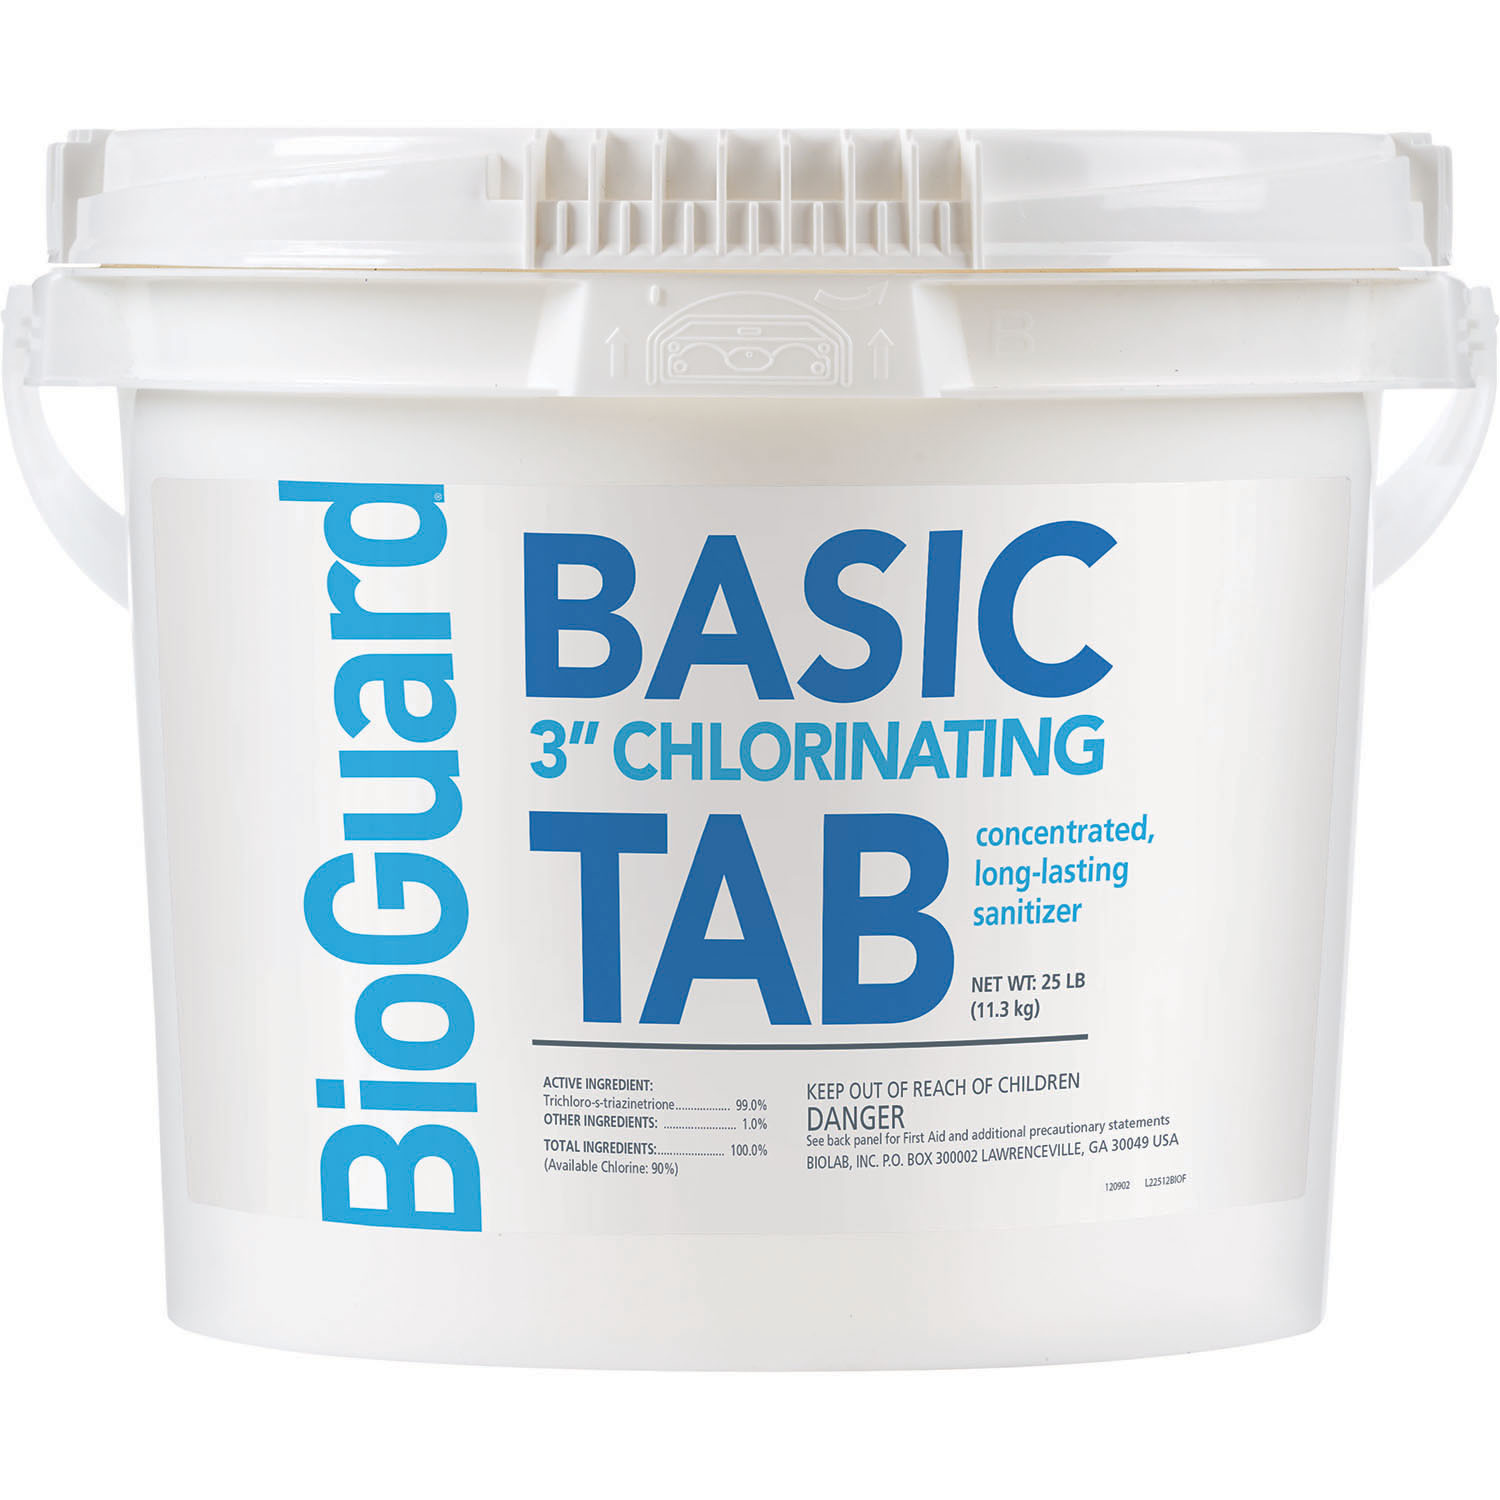 Basic 3'' Chlorinating Tab